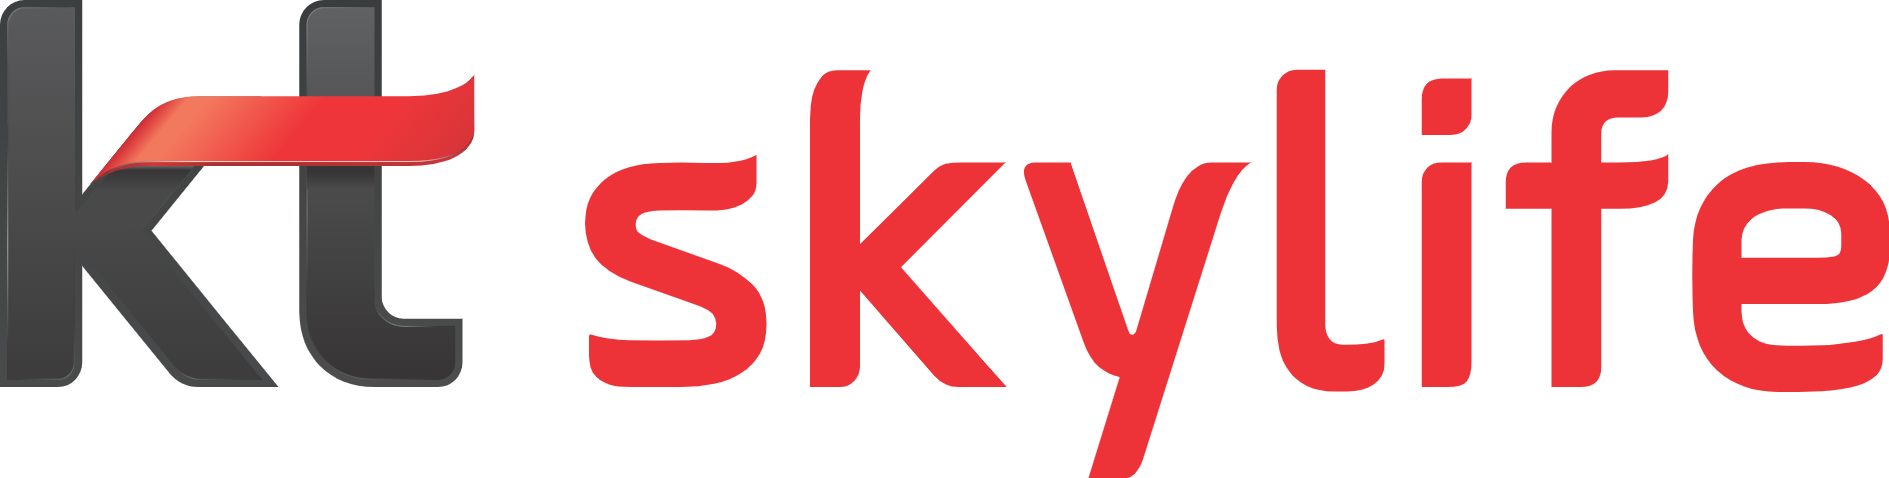 kt skylife logo 1